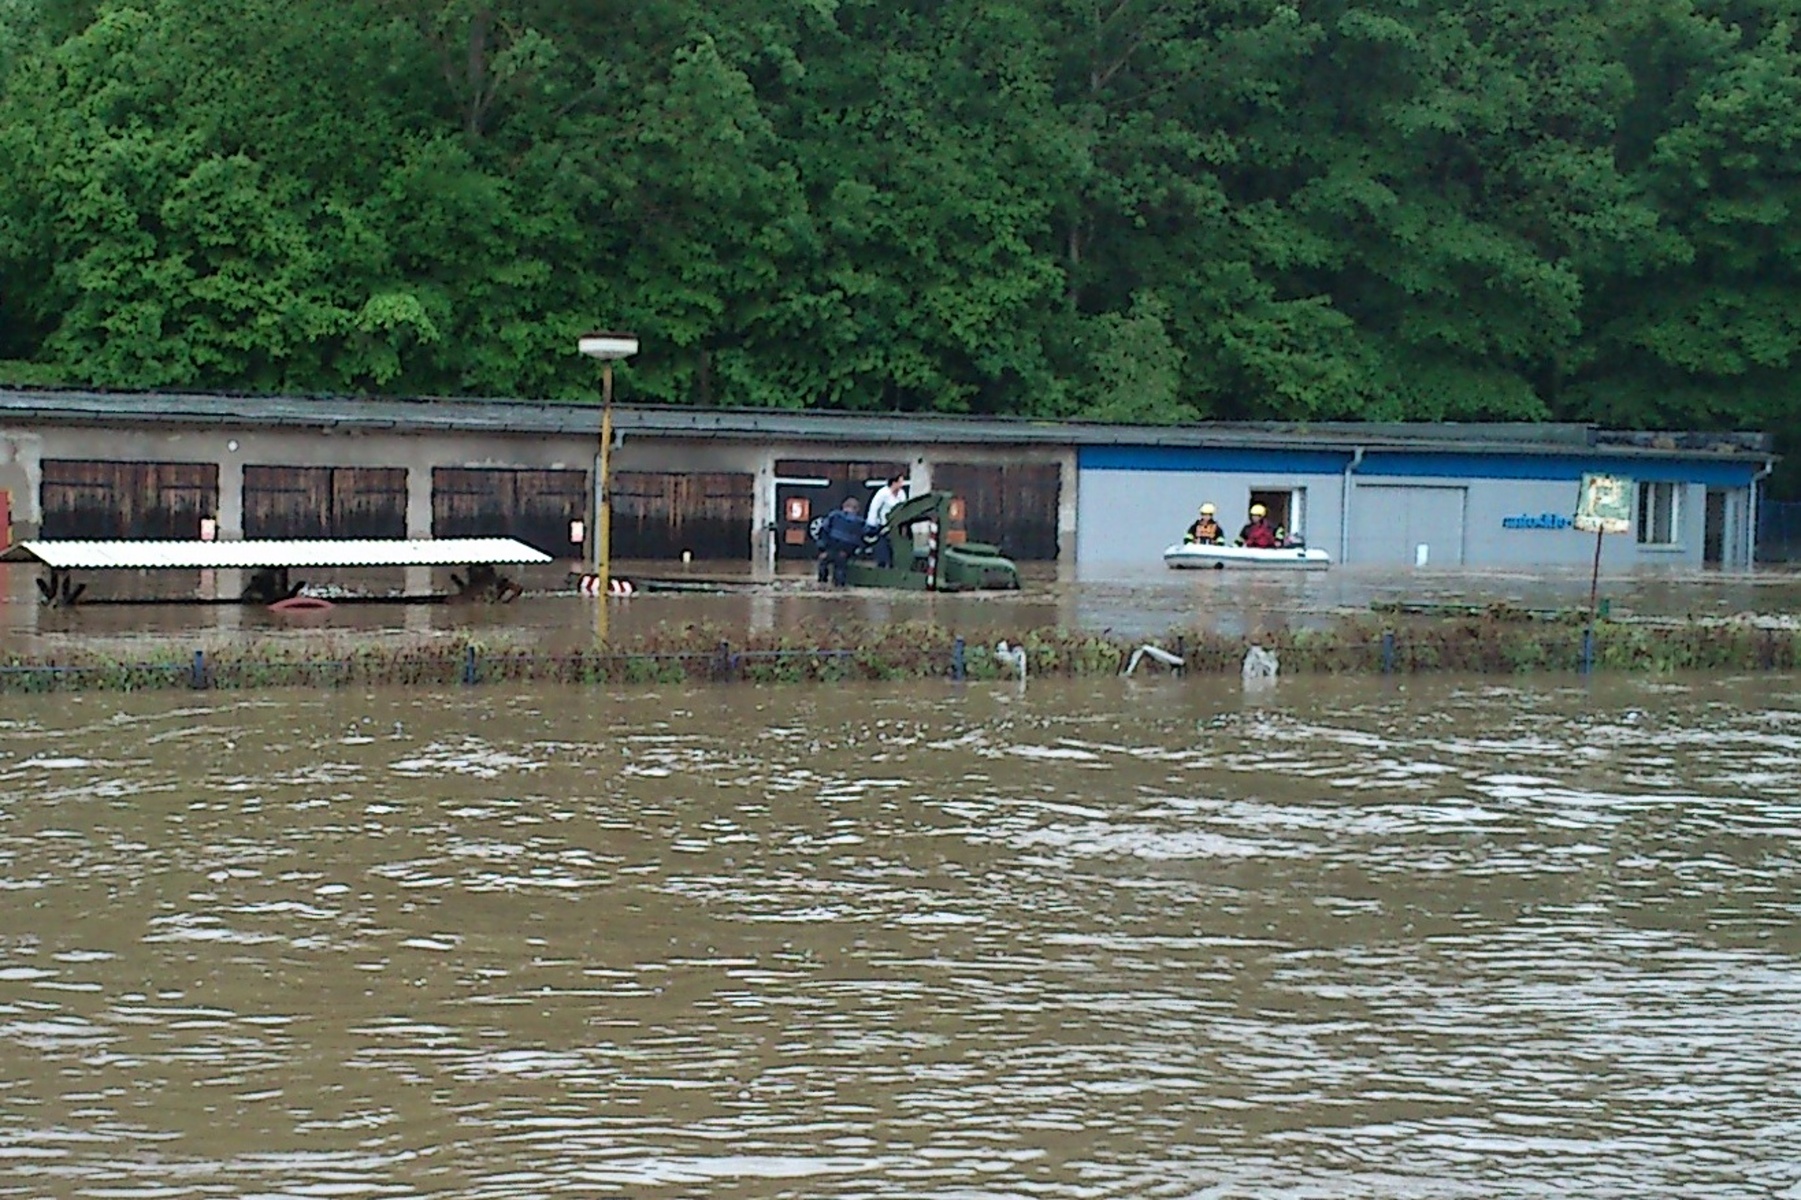 3 Záchrana čtyř osob ze zaplaveného auta, Český Krumlov - 2. 6. 2013 (3).jpg